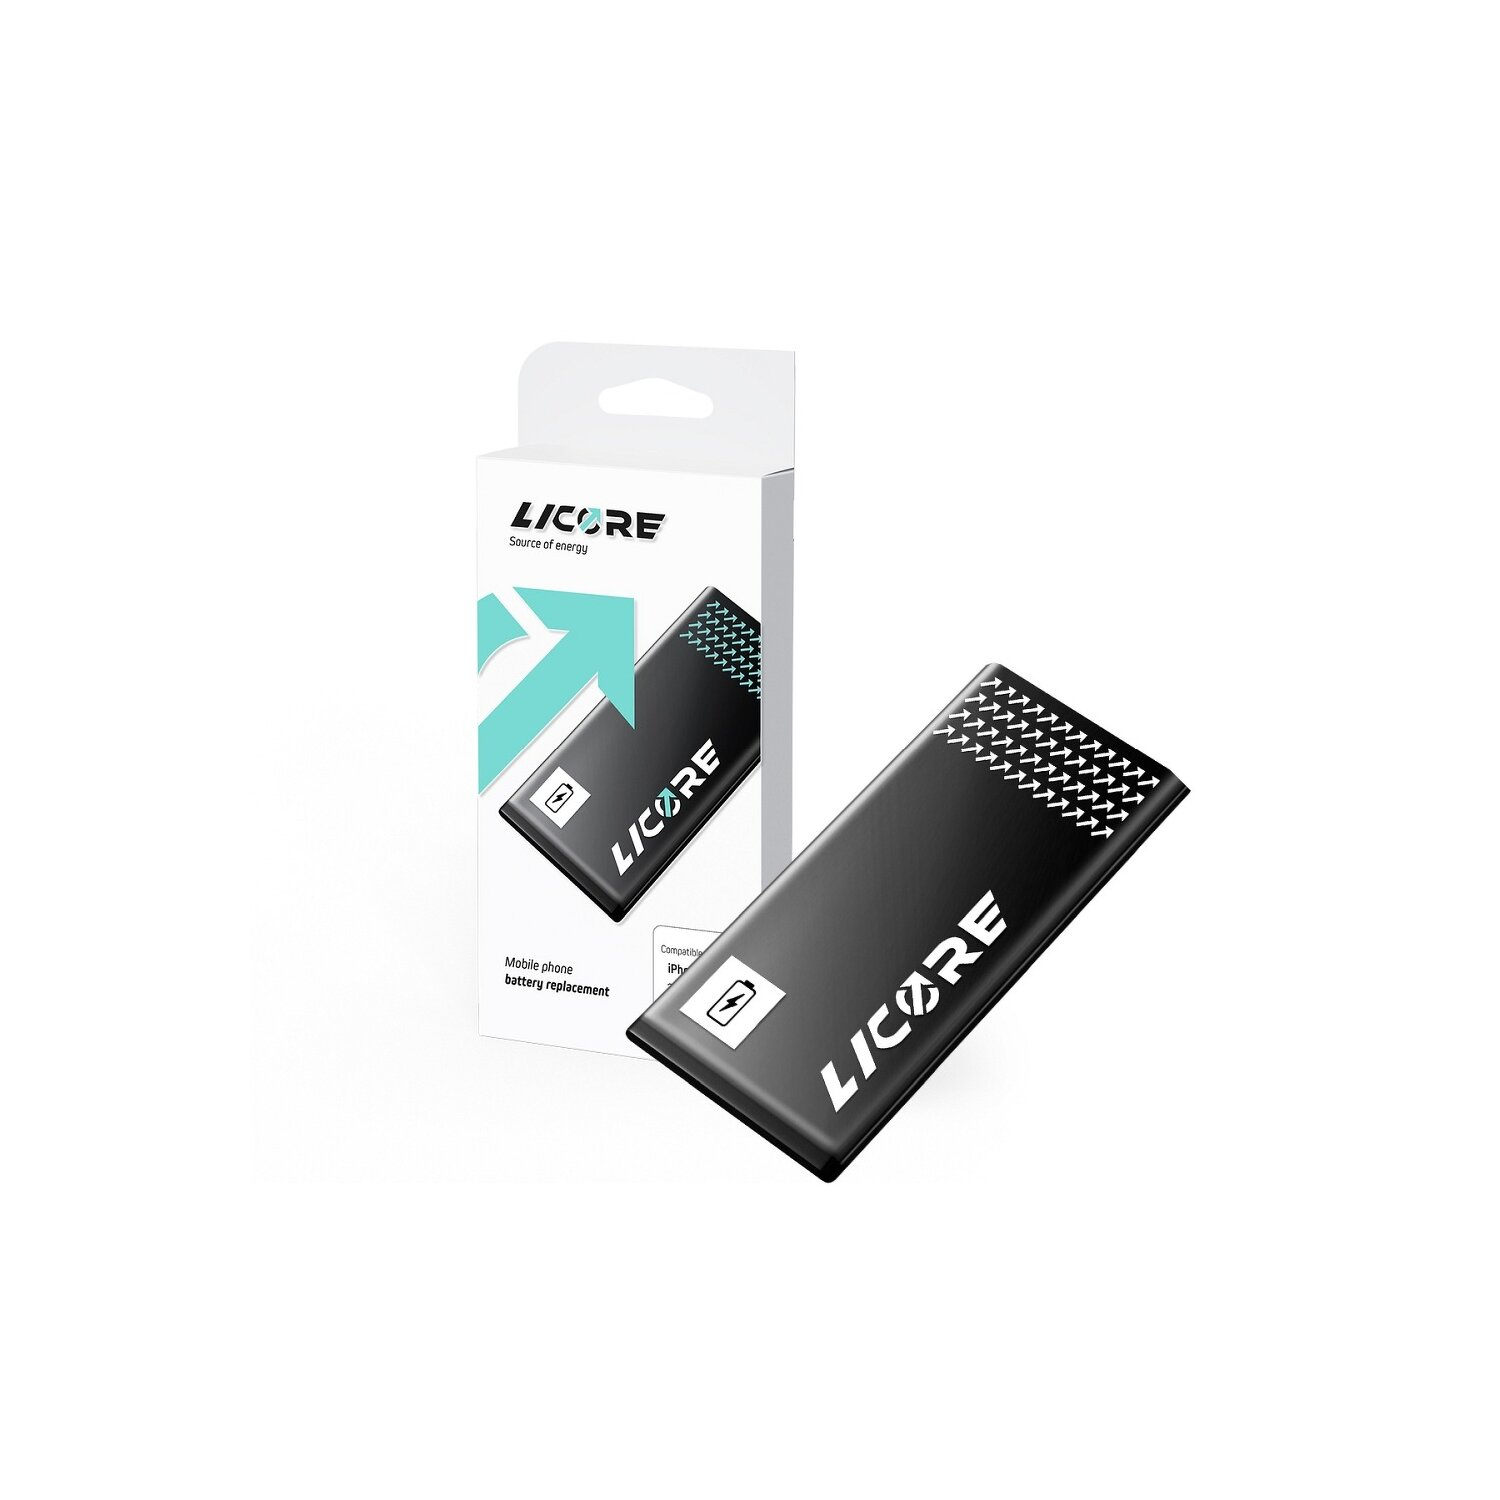 Akku 4s Licore kompatibel mit COFI li-Ion Ersatz iPhone Akku 1430mAh